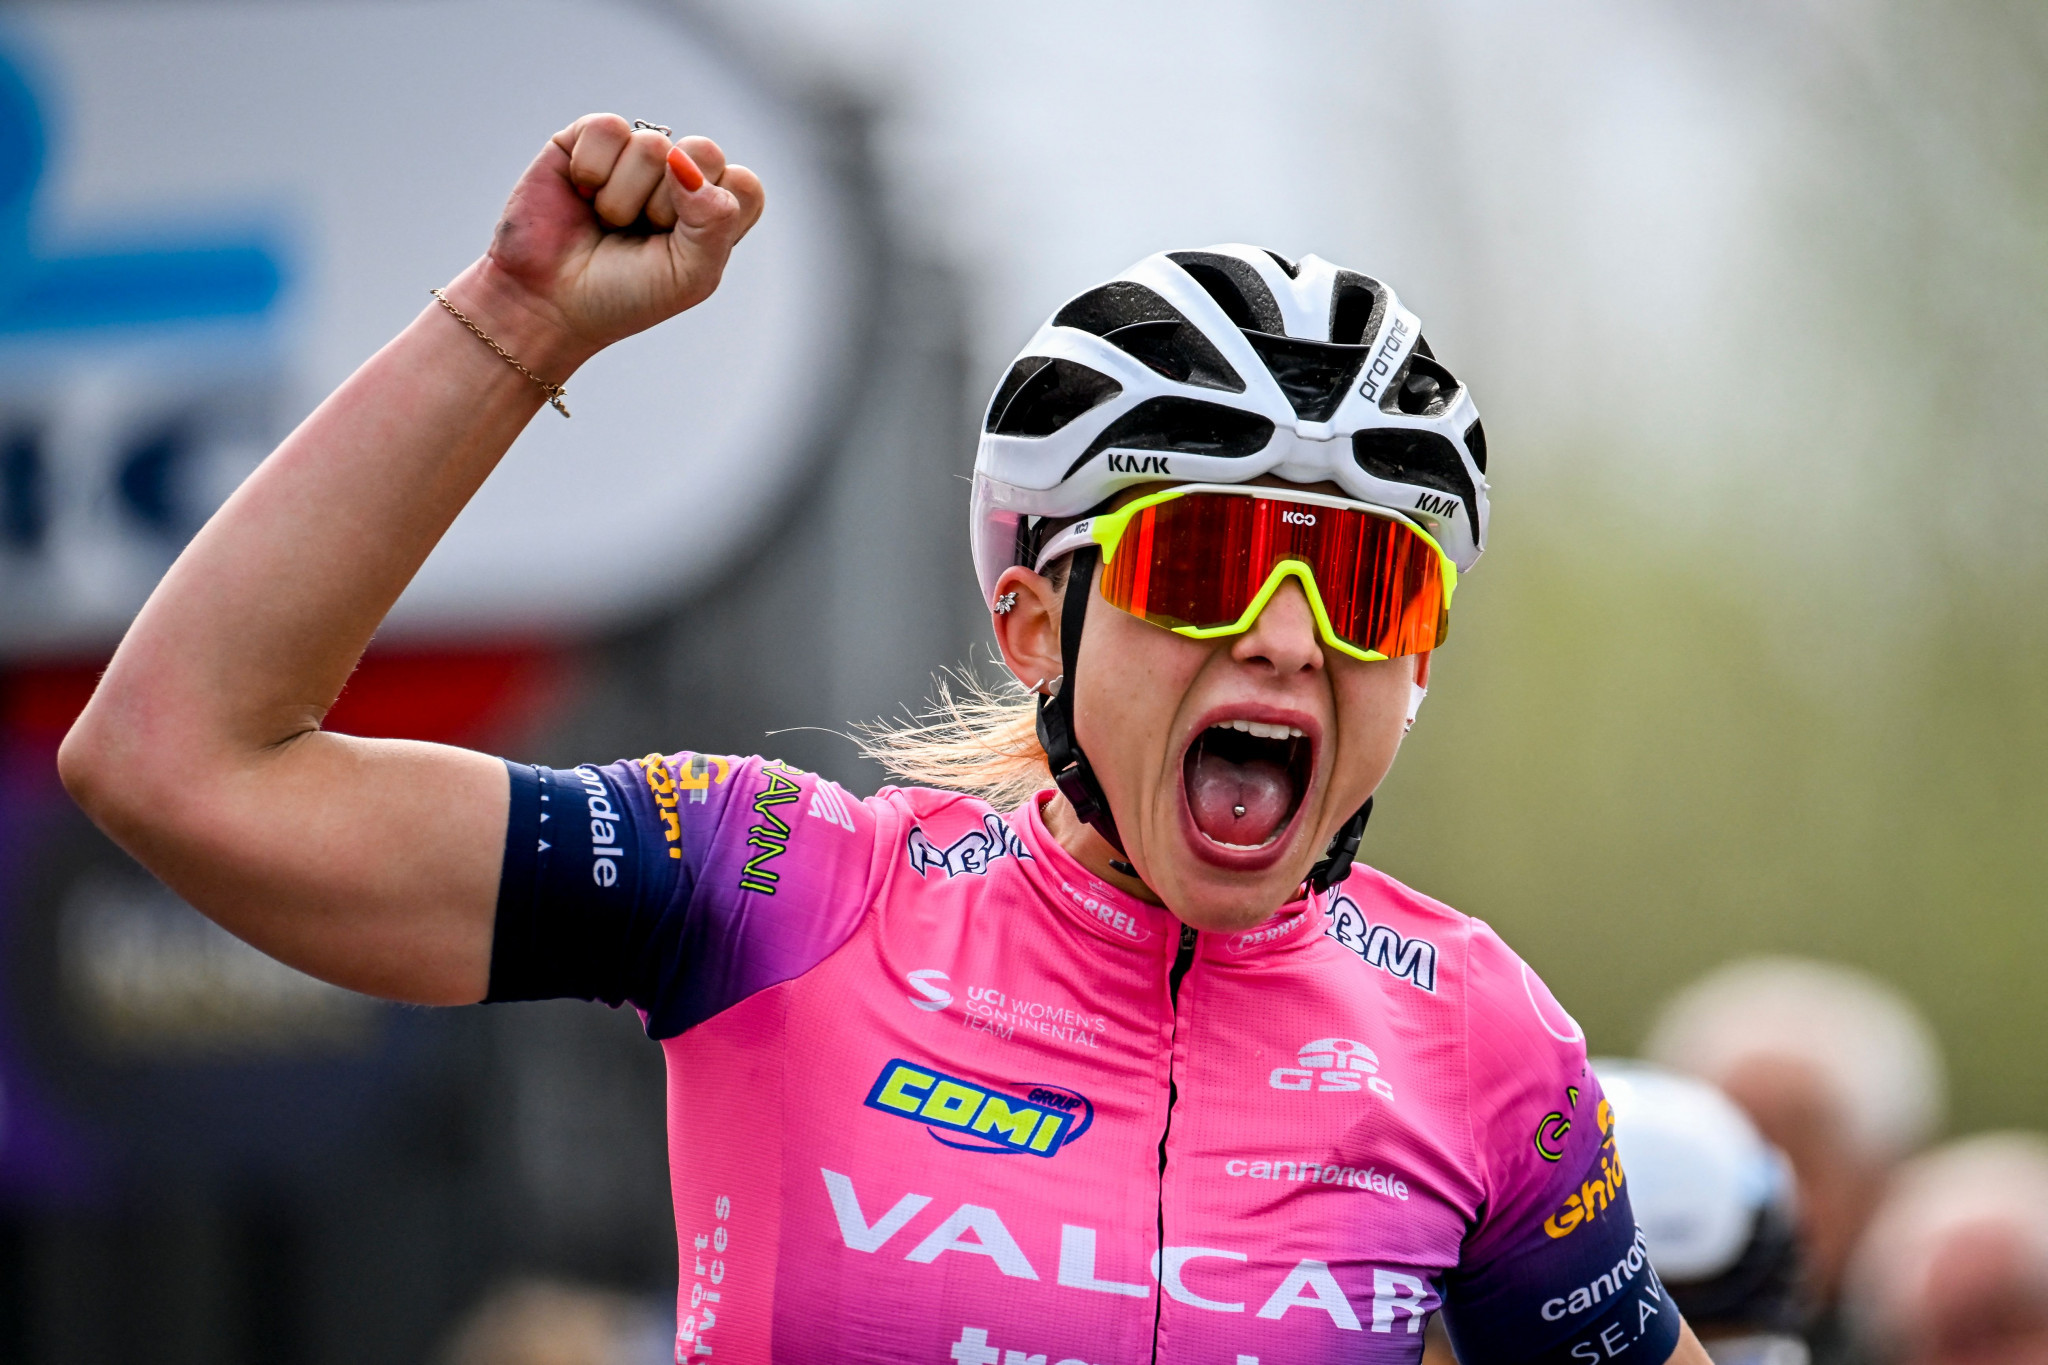 Italy’s Consonni wins three-day UCI Women’s WorldTour race on Chongming Island